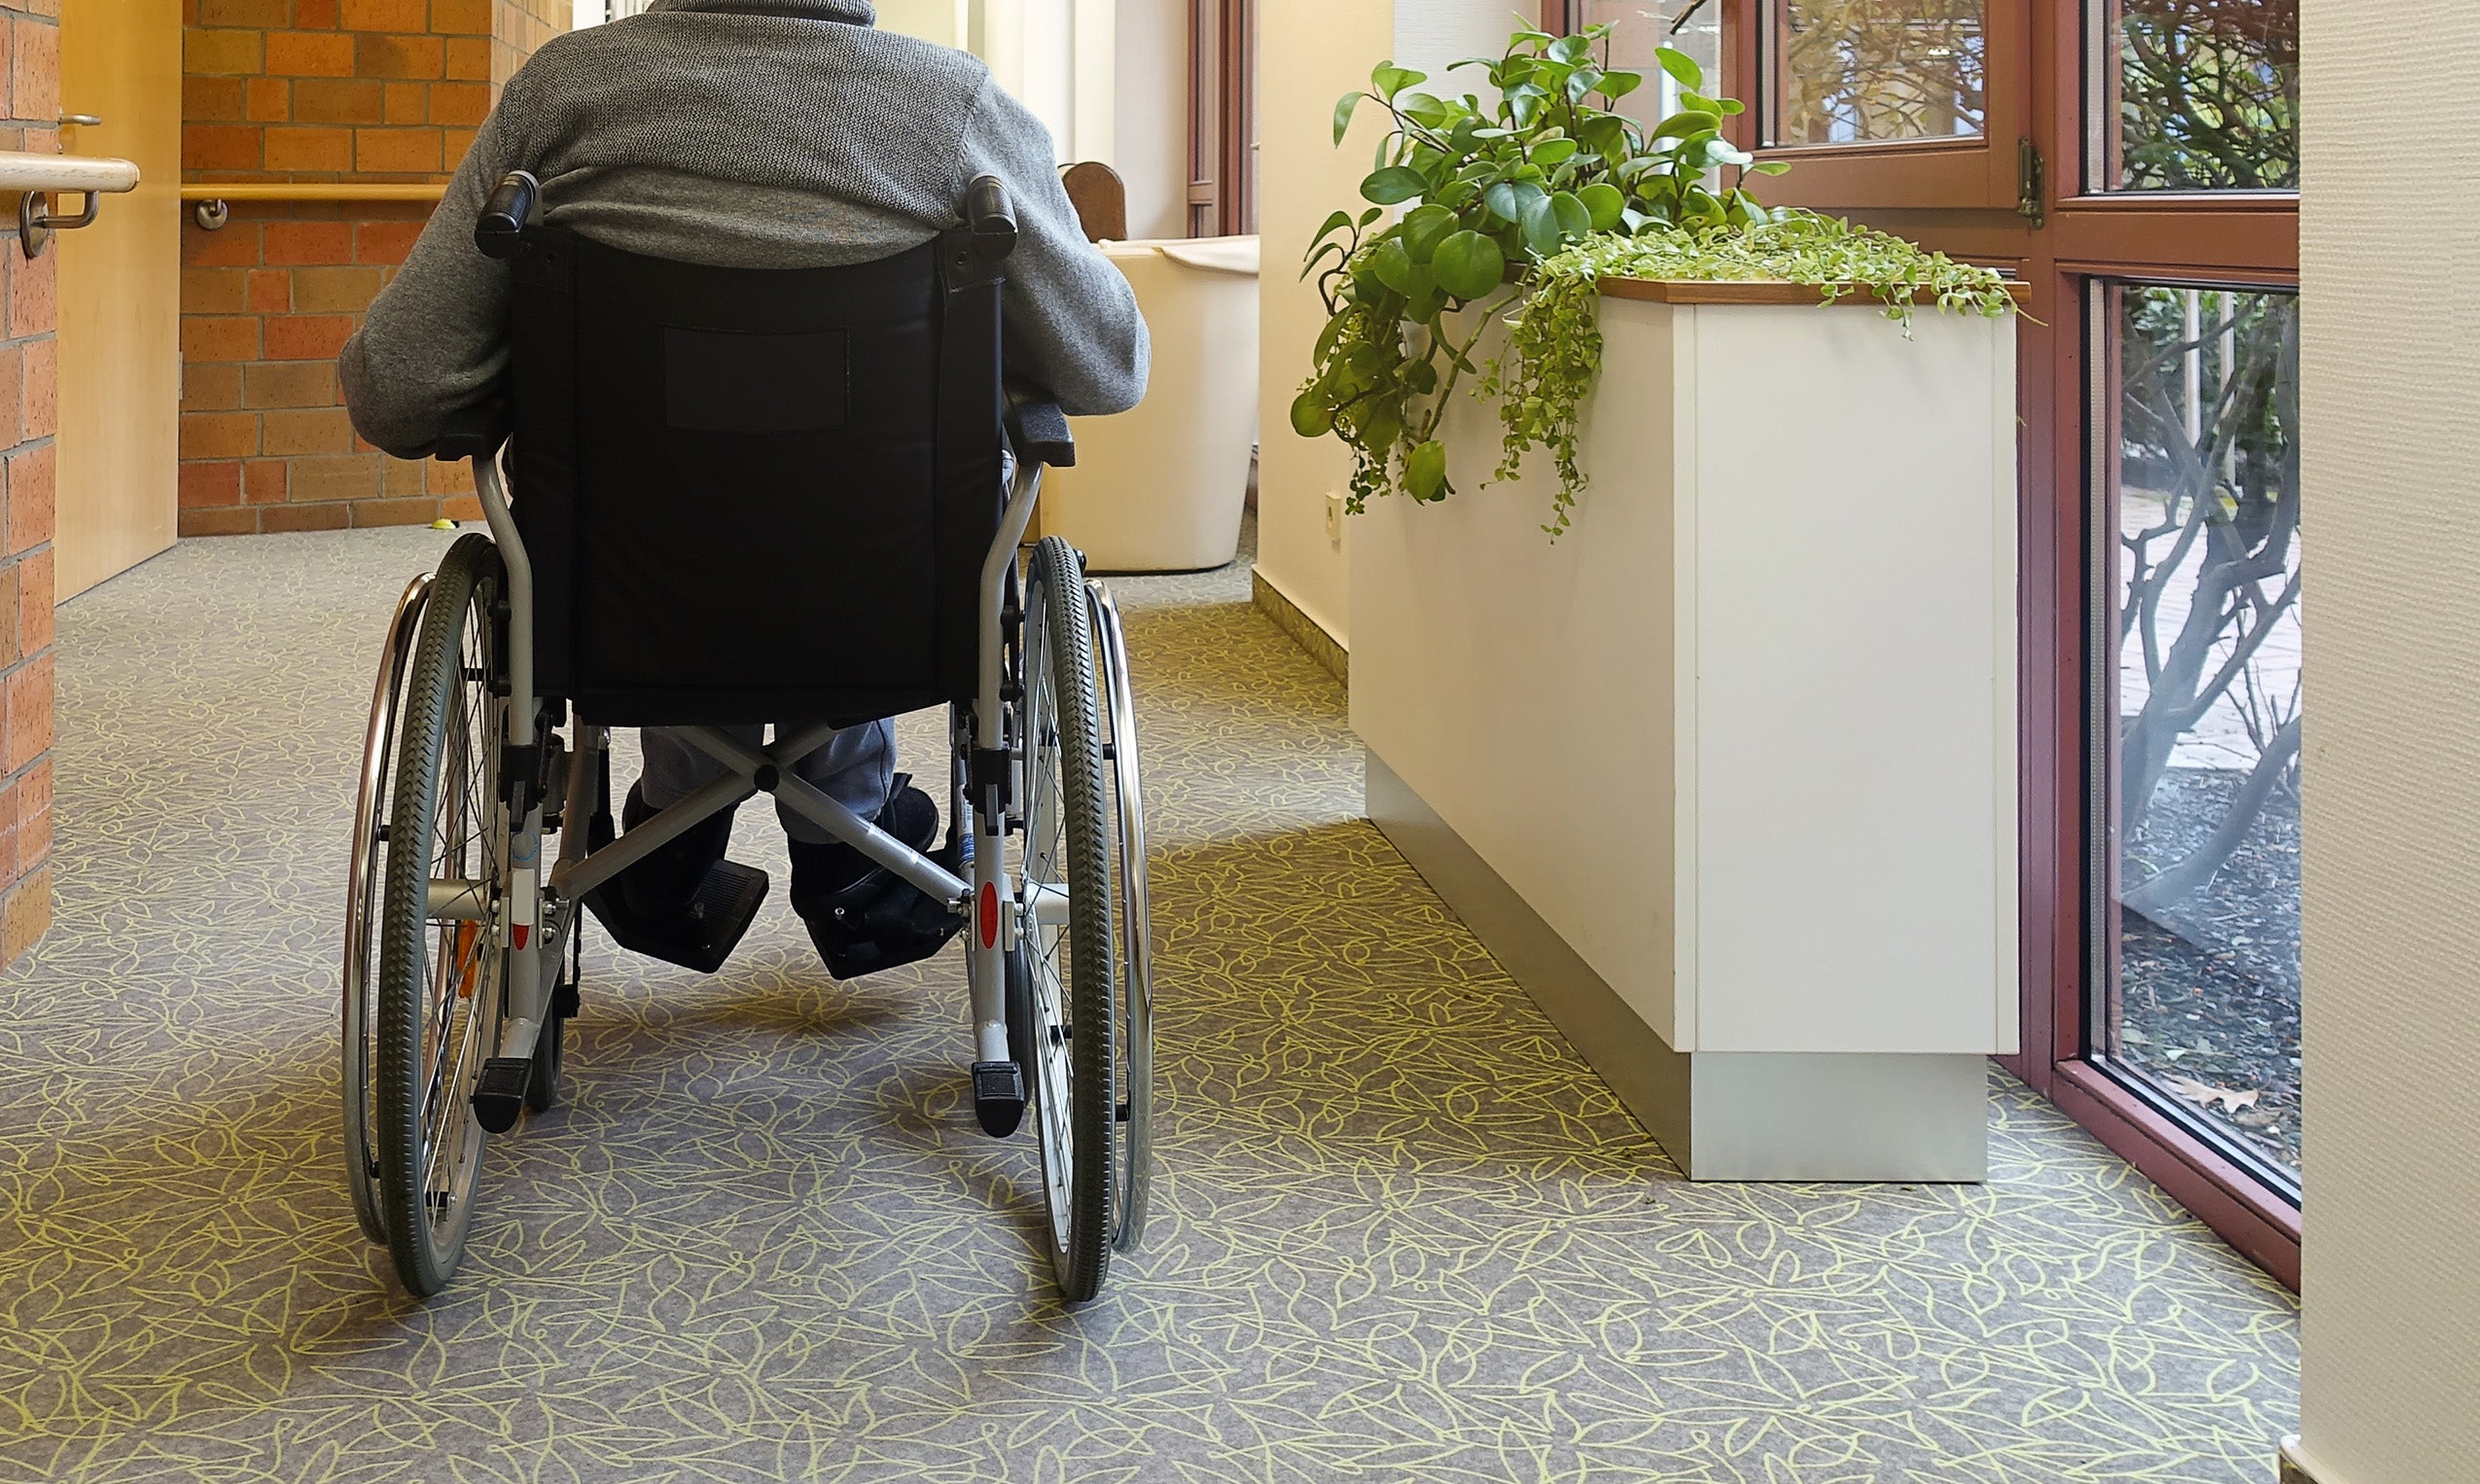 An elderly man sitting in a wheelchair in the corridor near the window